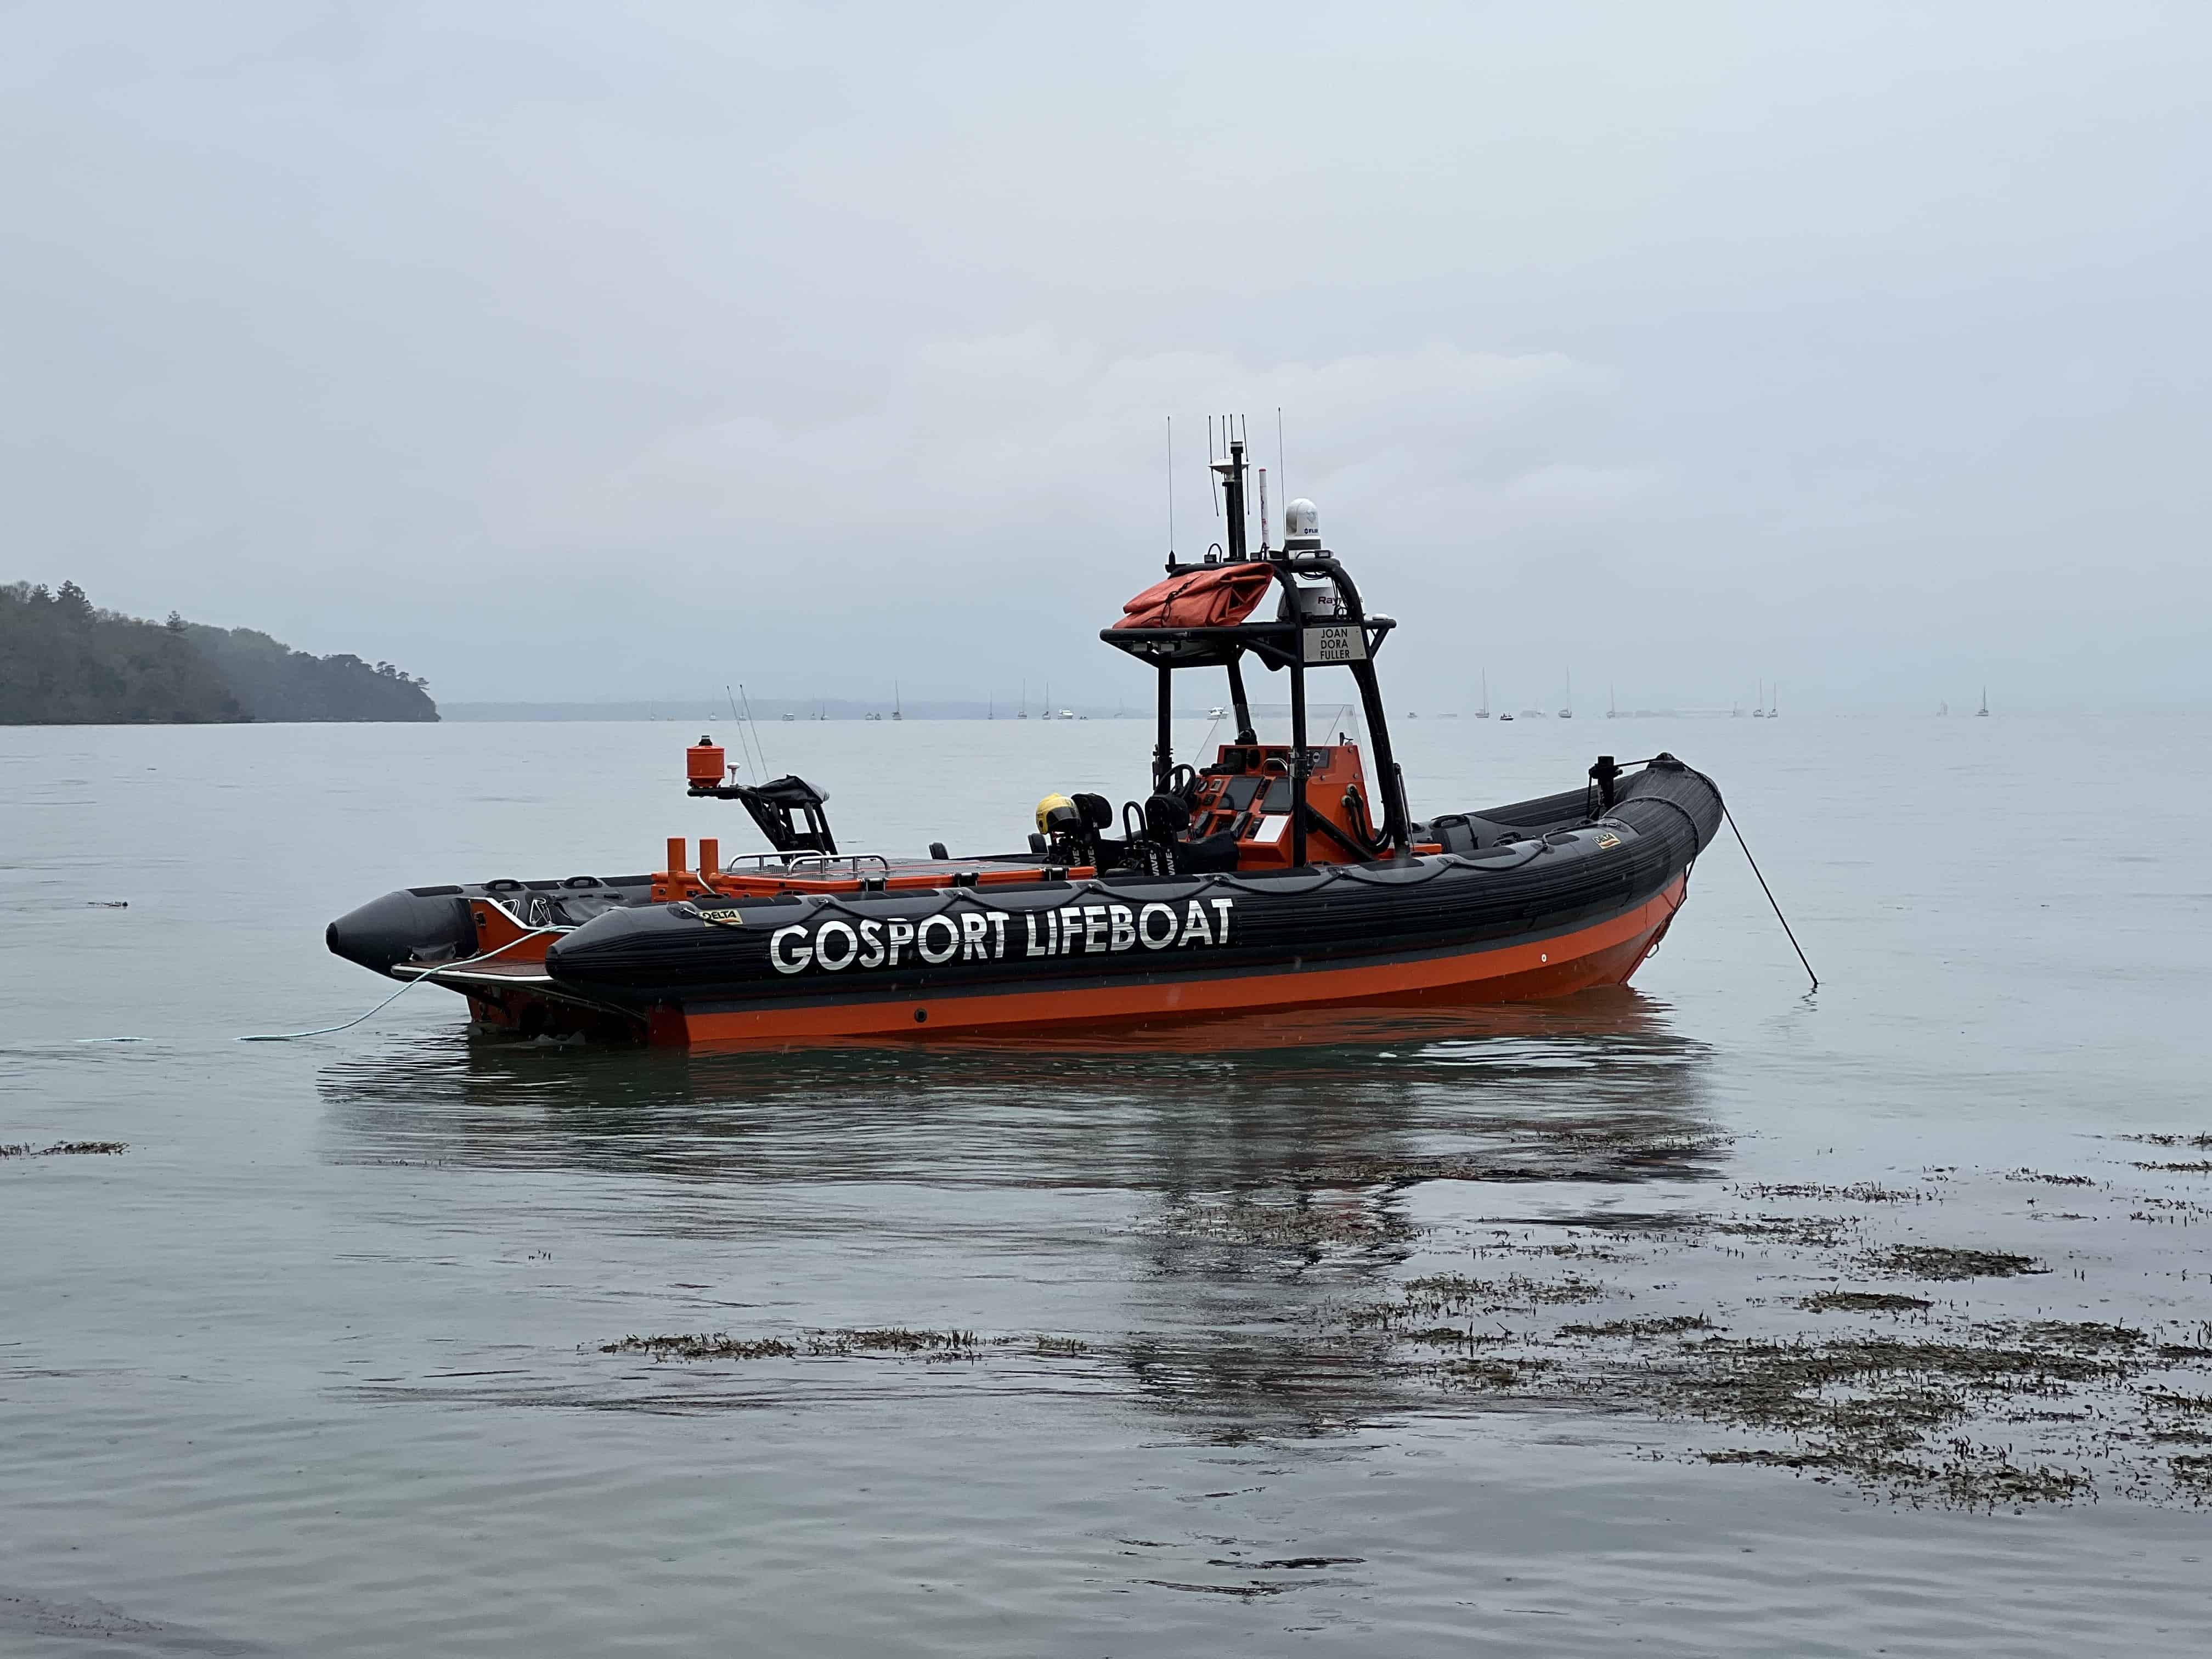 Gosport Lifeboat